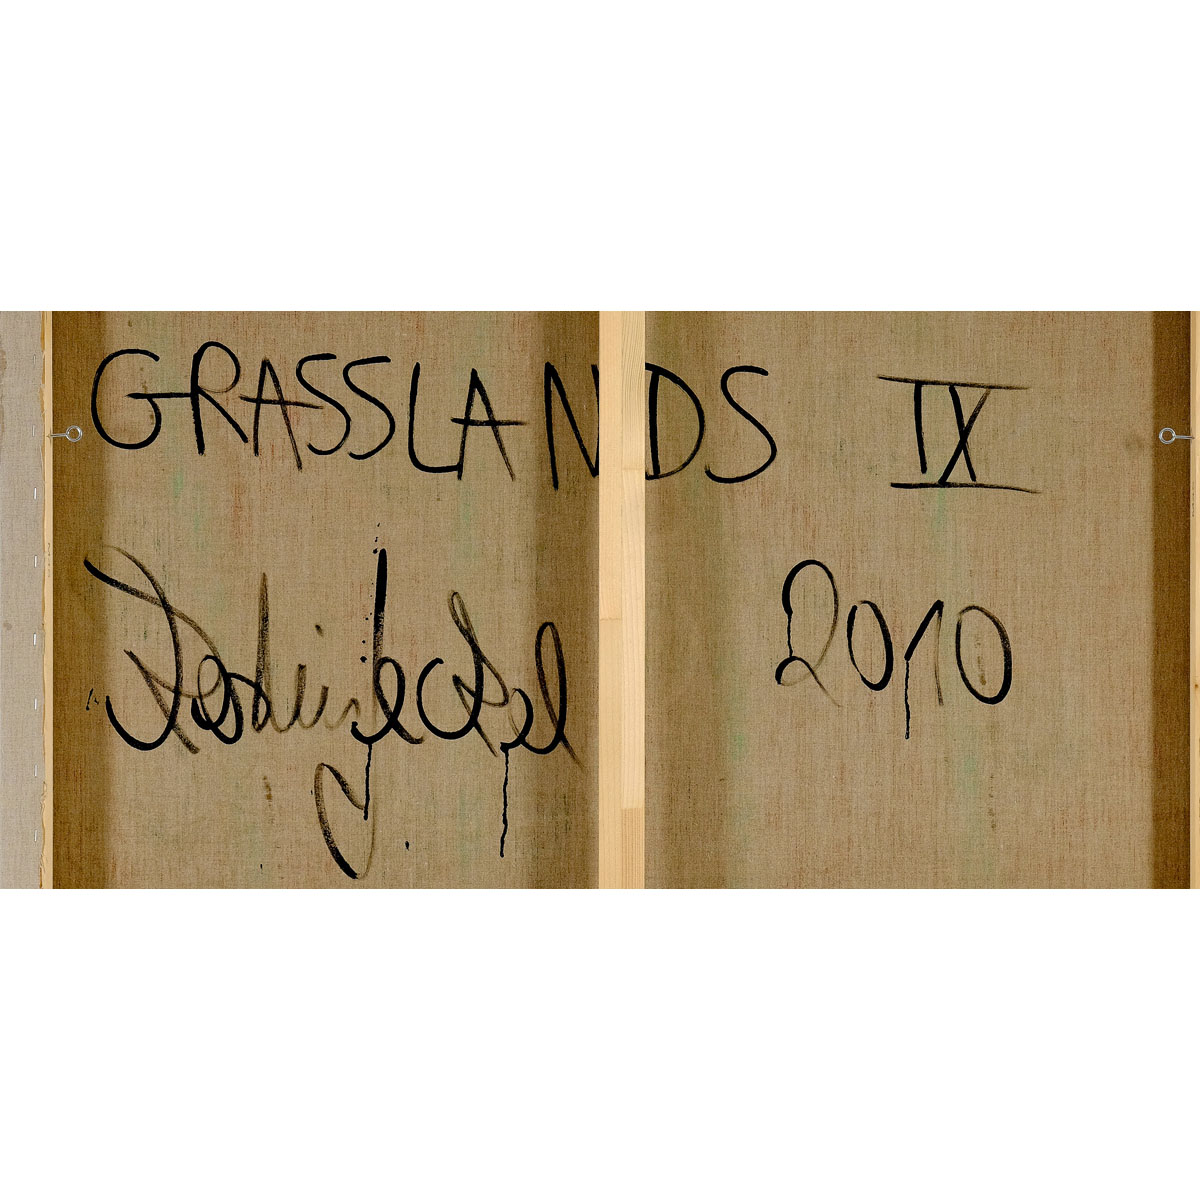 GRASSLANDS * IX